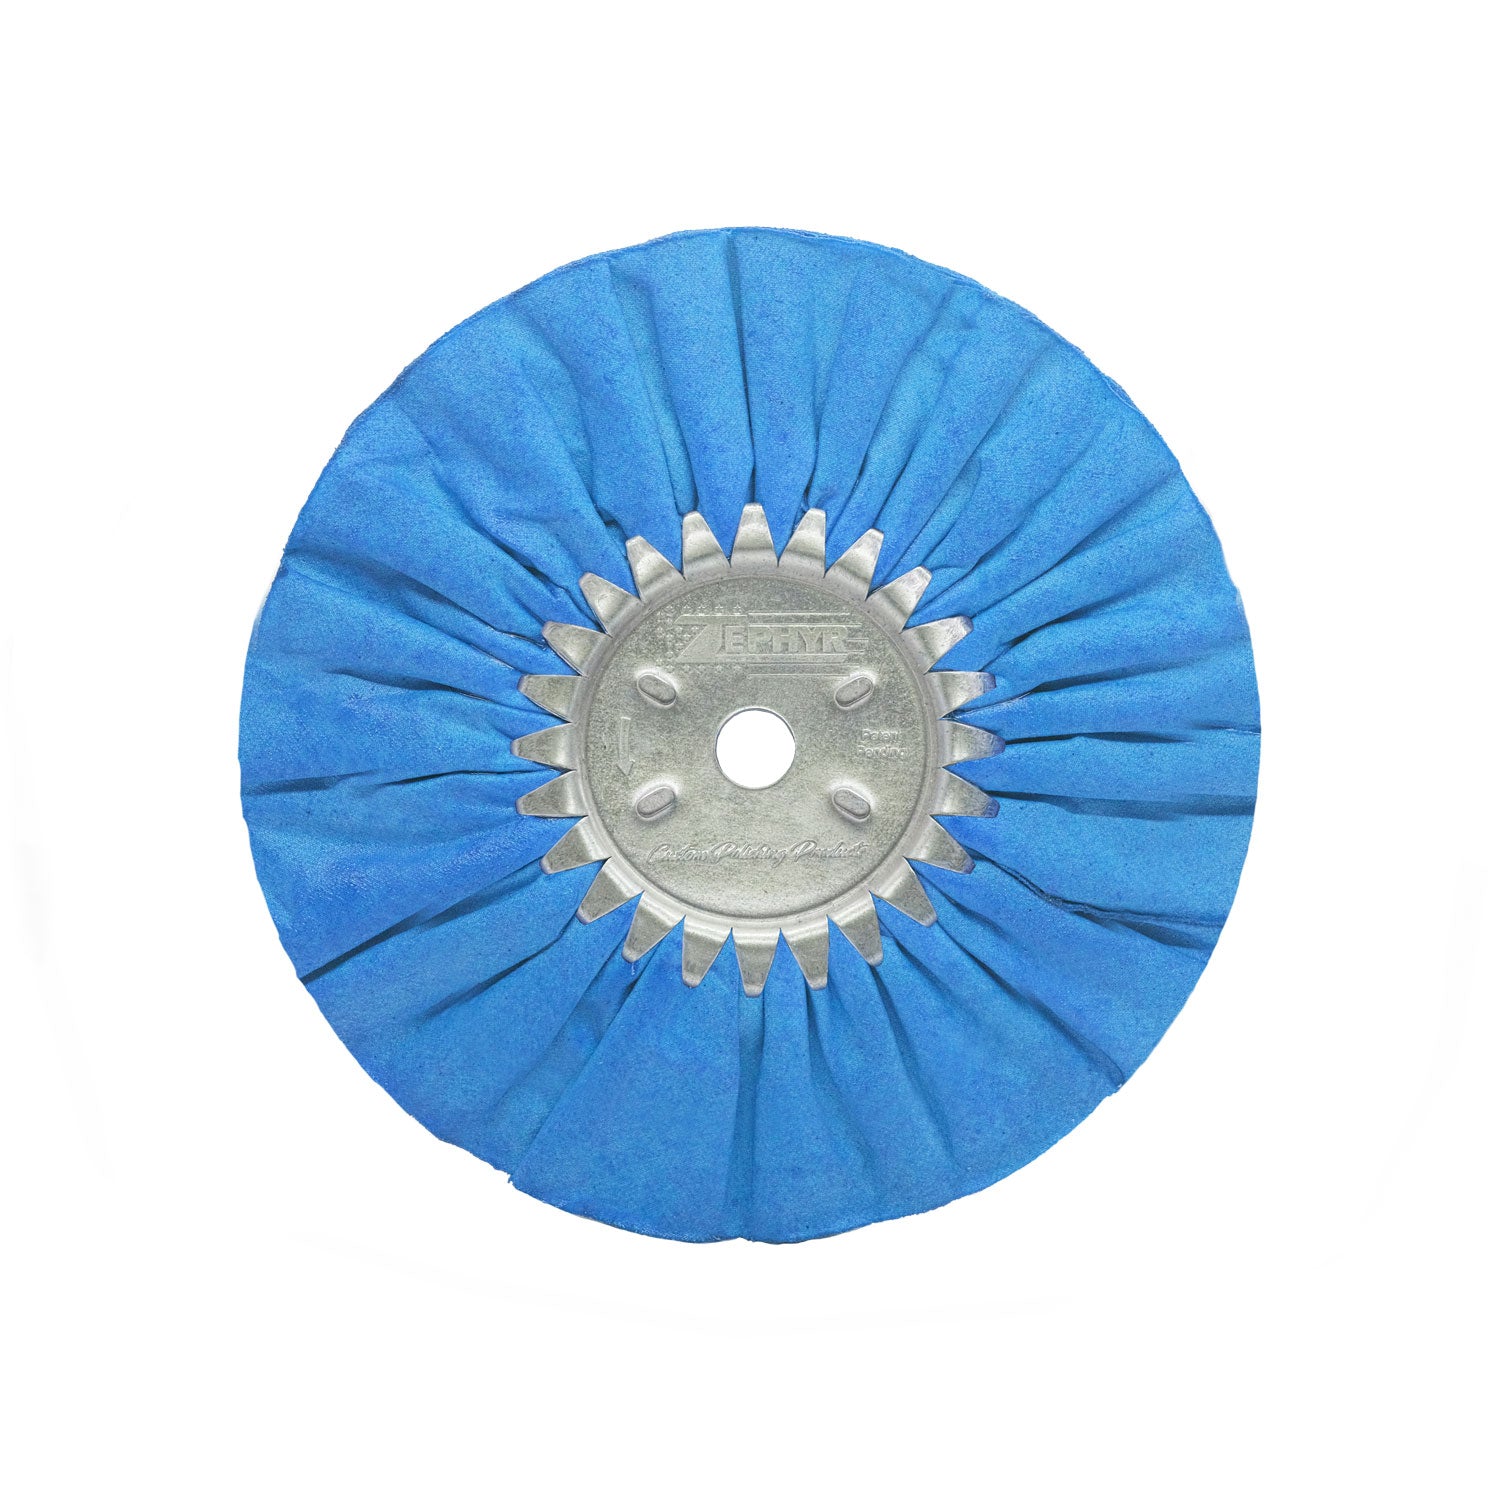 Zephyr AWB-58-8CD Blue Baron Clear Dip 8 Buffing Wheel